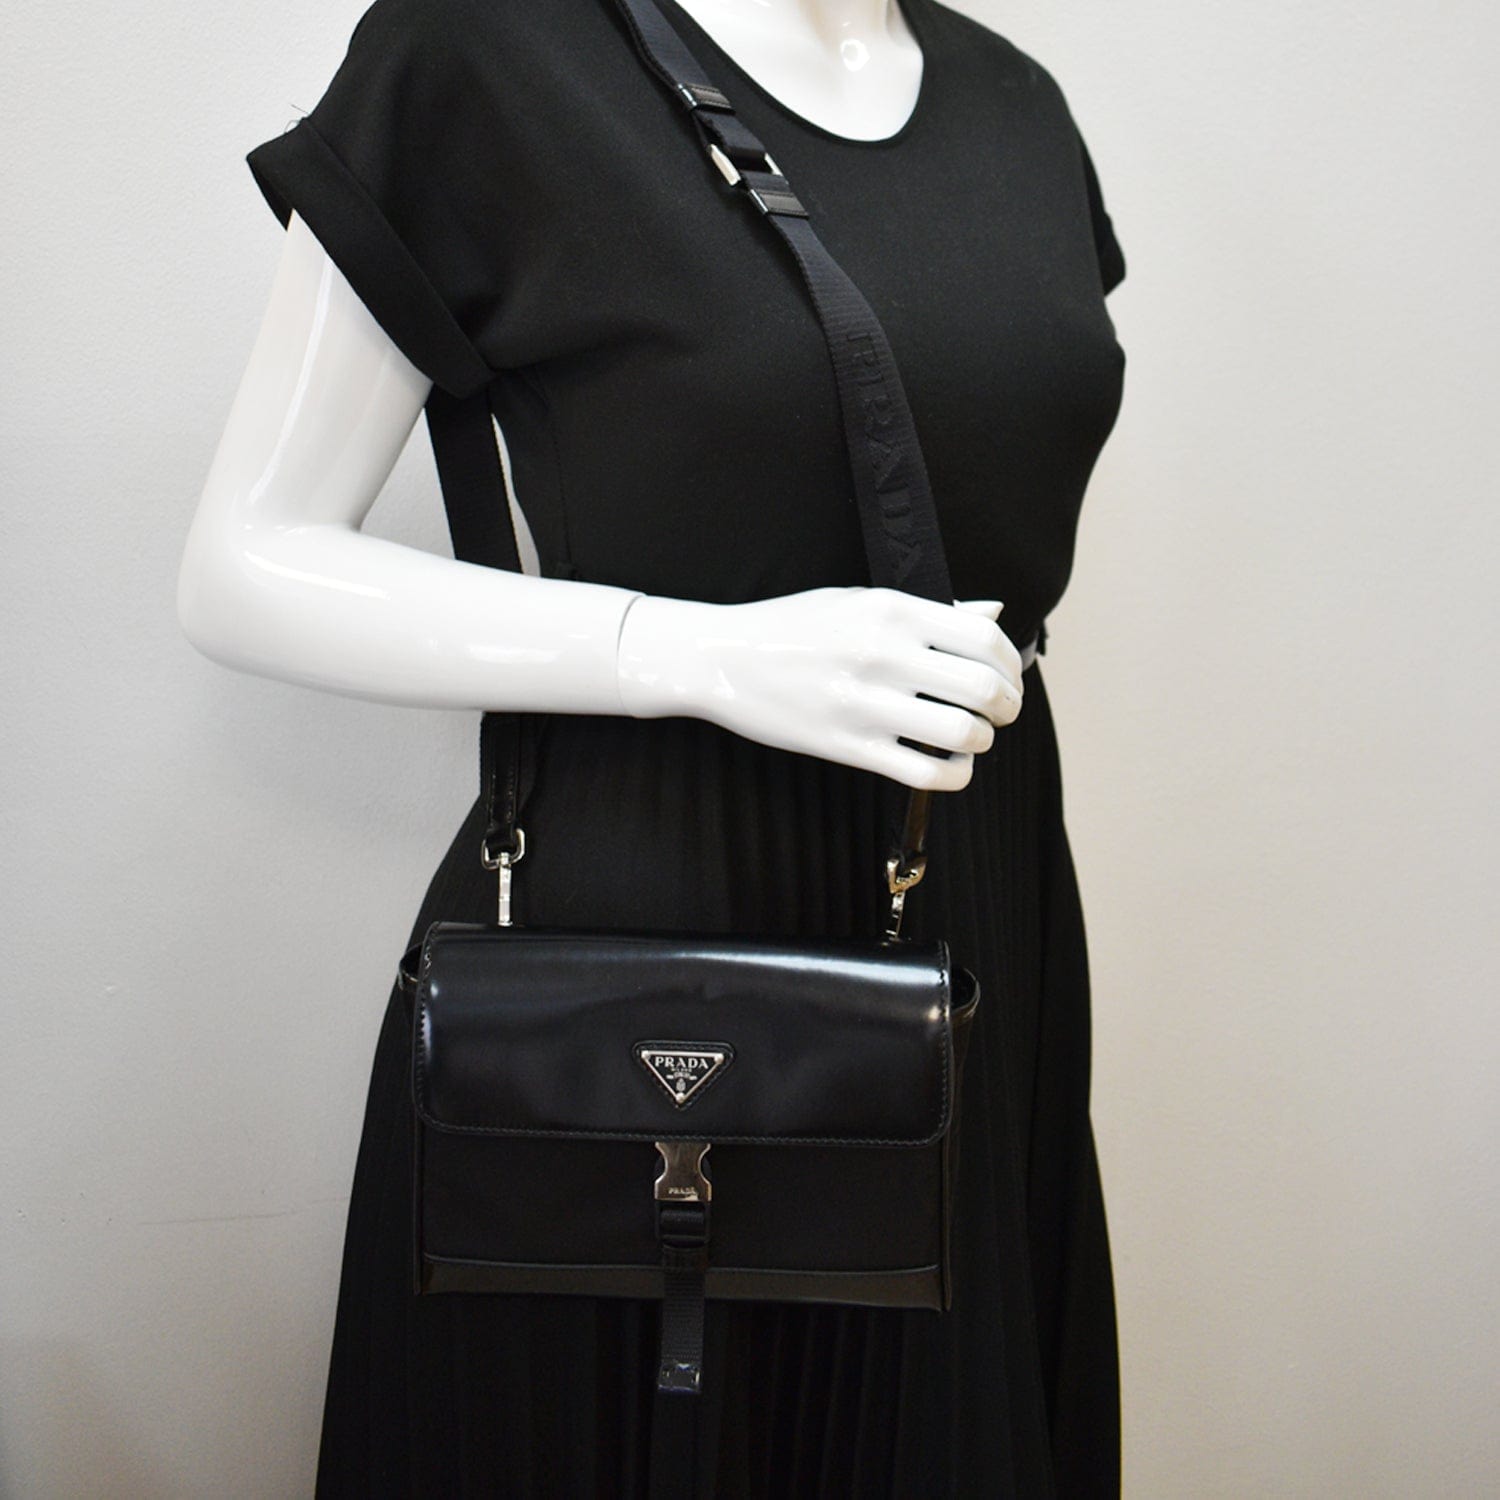 Prada adidas Re-Nylon Shoulder Bag Black in Nylon/Leather with